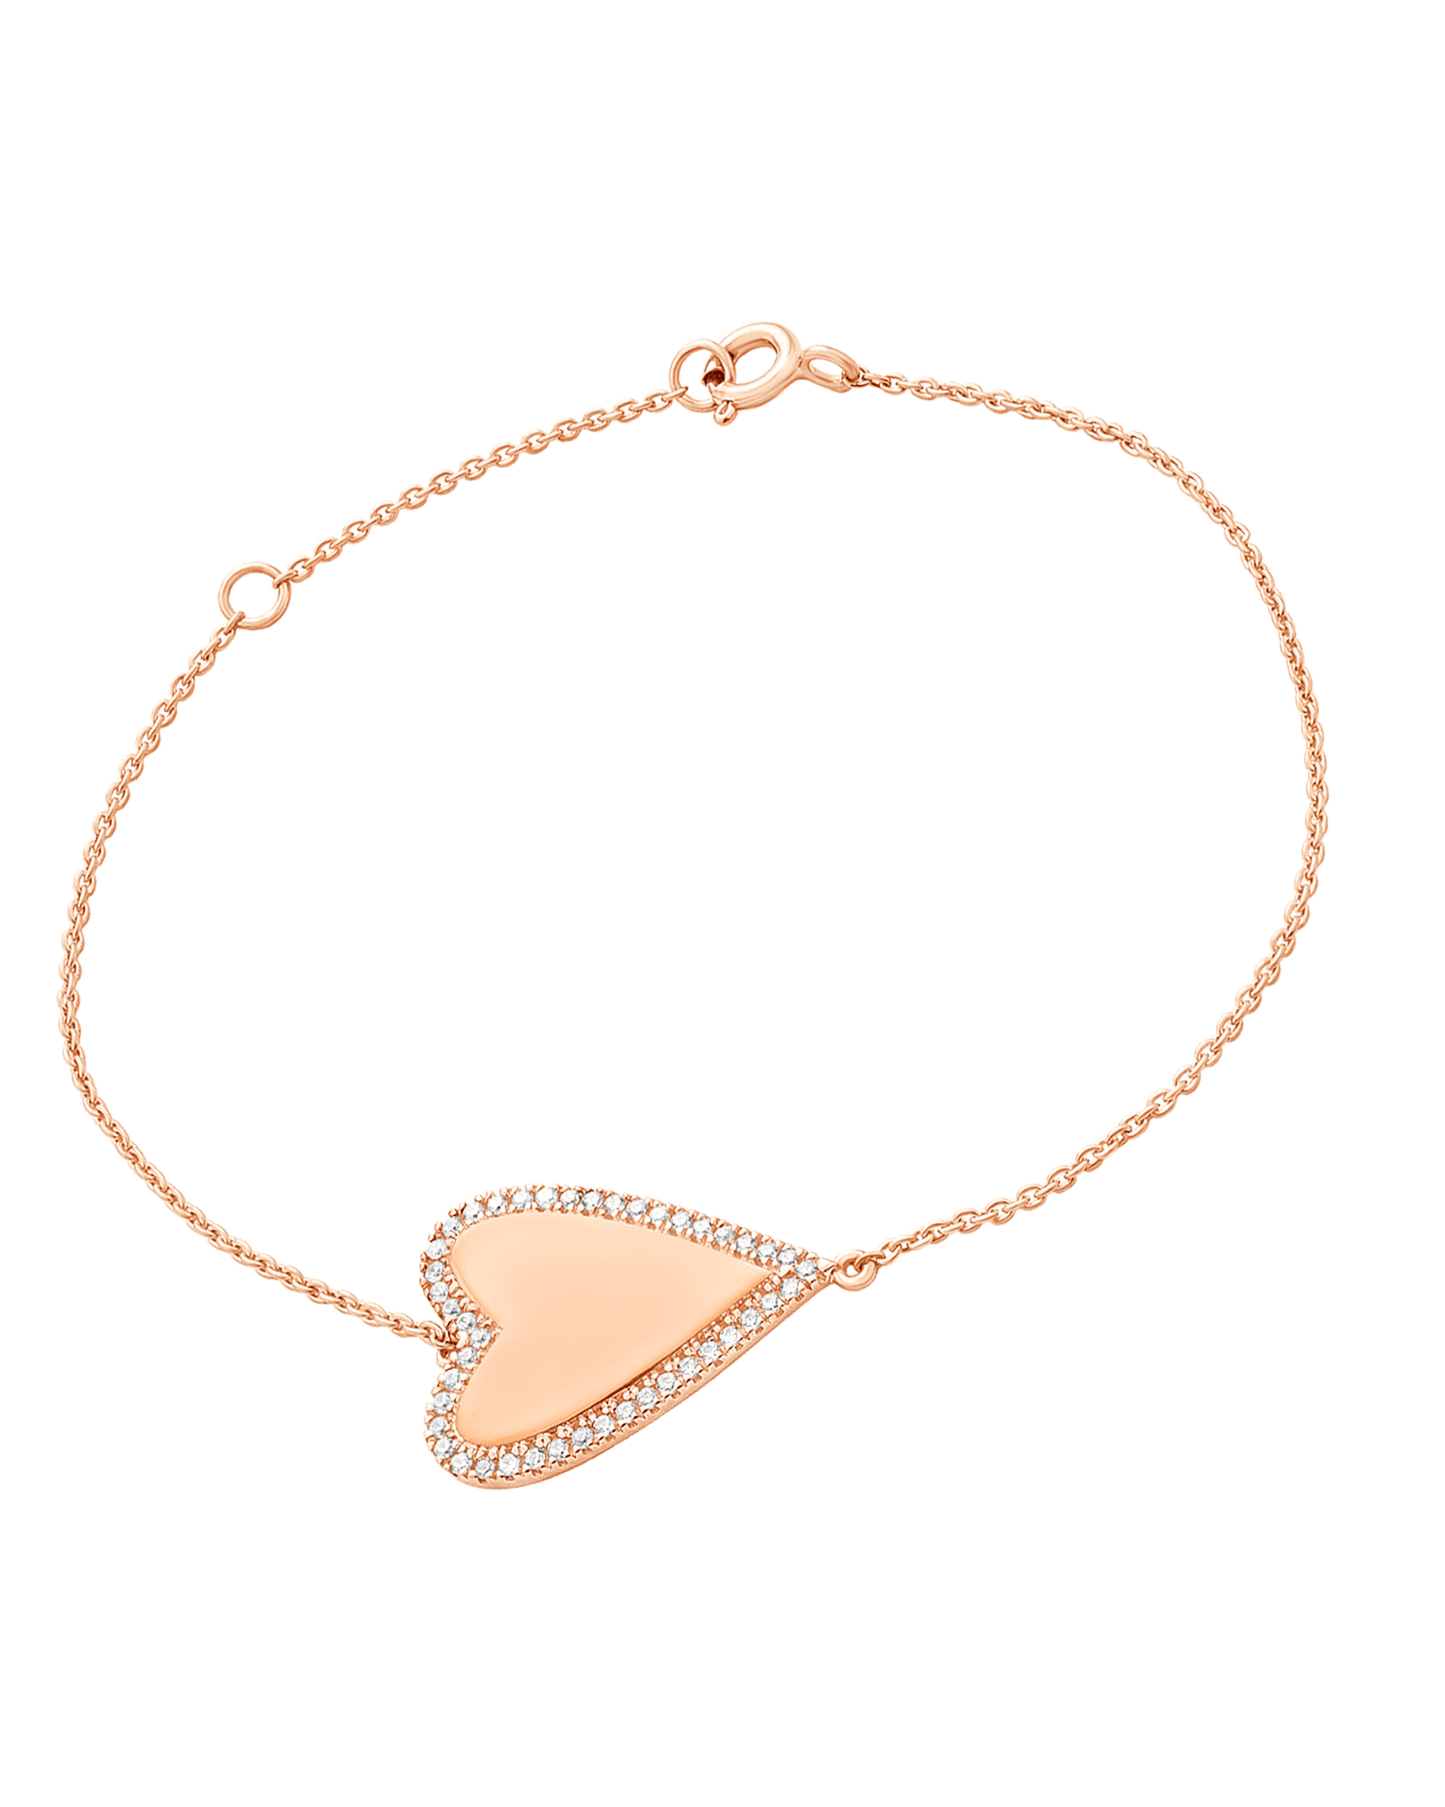 Outlined Diamond Heart Bracelet - 925 Sterling Silver Bracelets magal-dev 